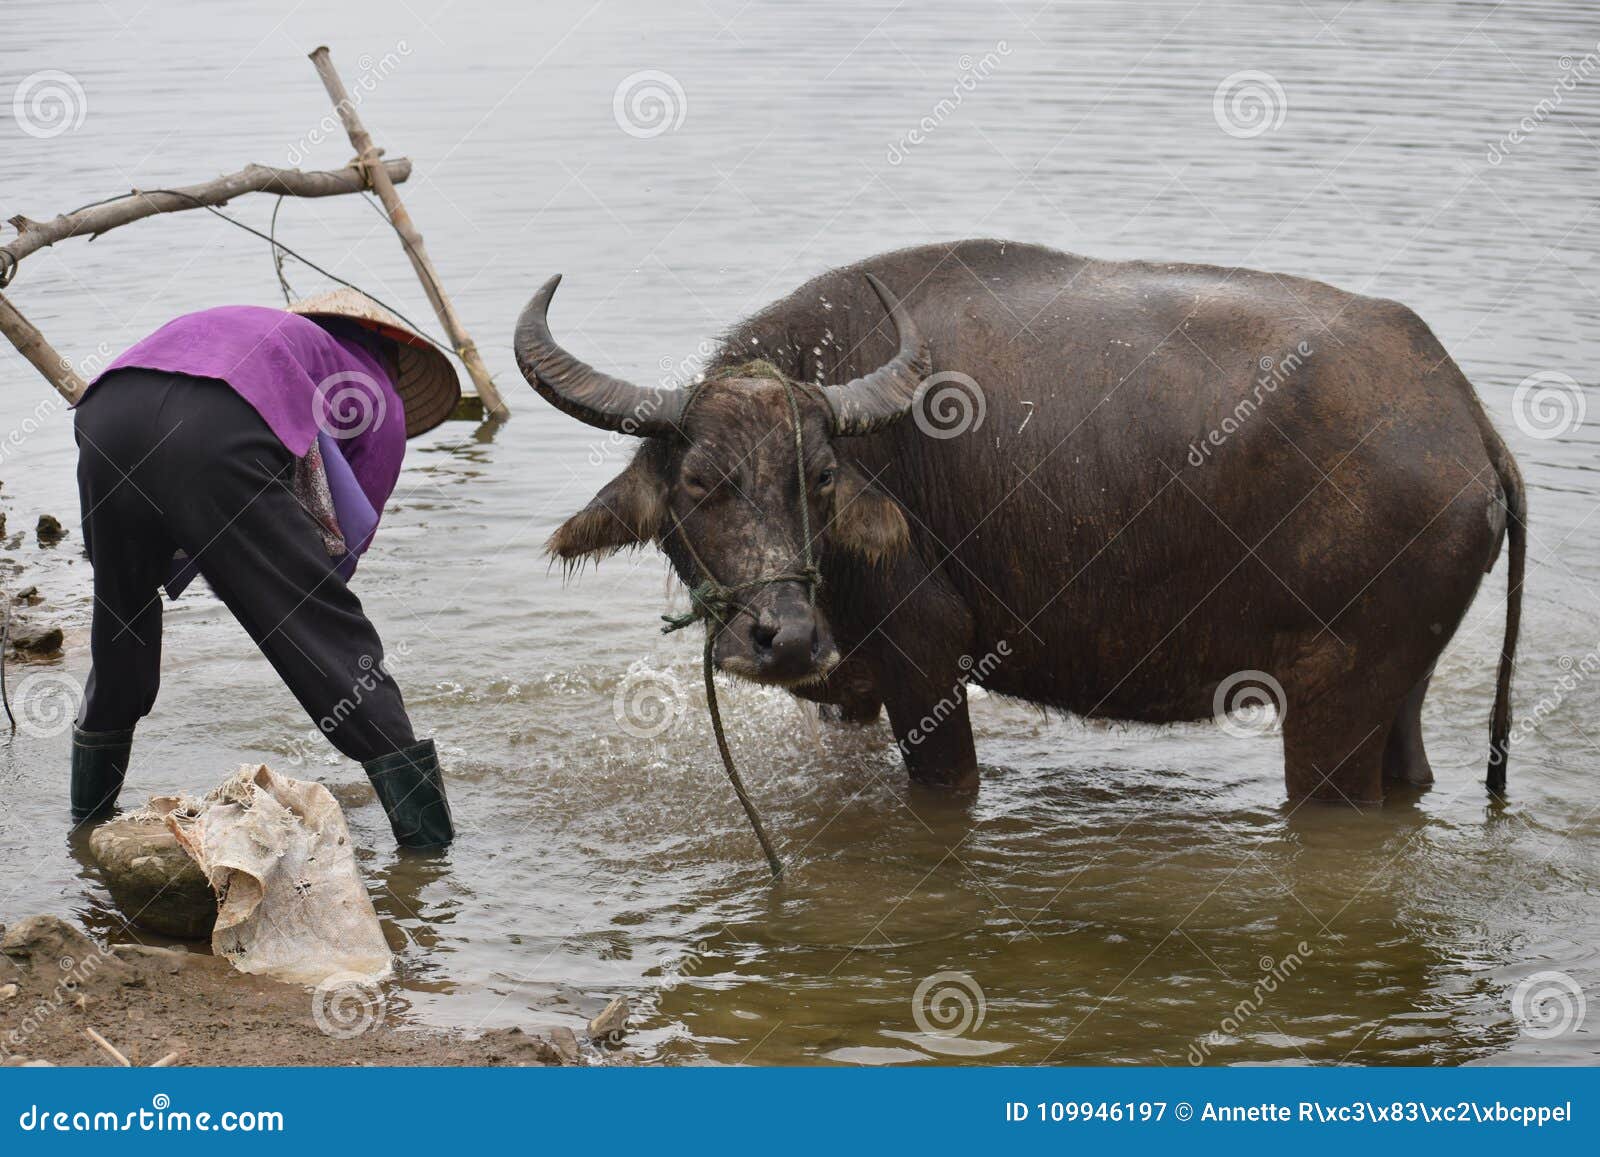 Closeup of Vietnamese Woman Bathing a Water Buffalo after Work, Vietnam, Hanoi Stock Image - Image of mammal, hanoi: 109946197